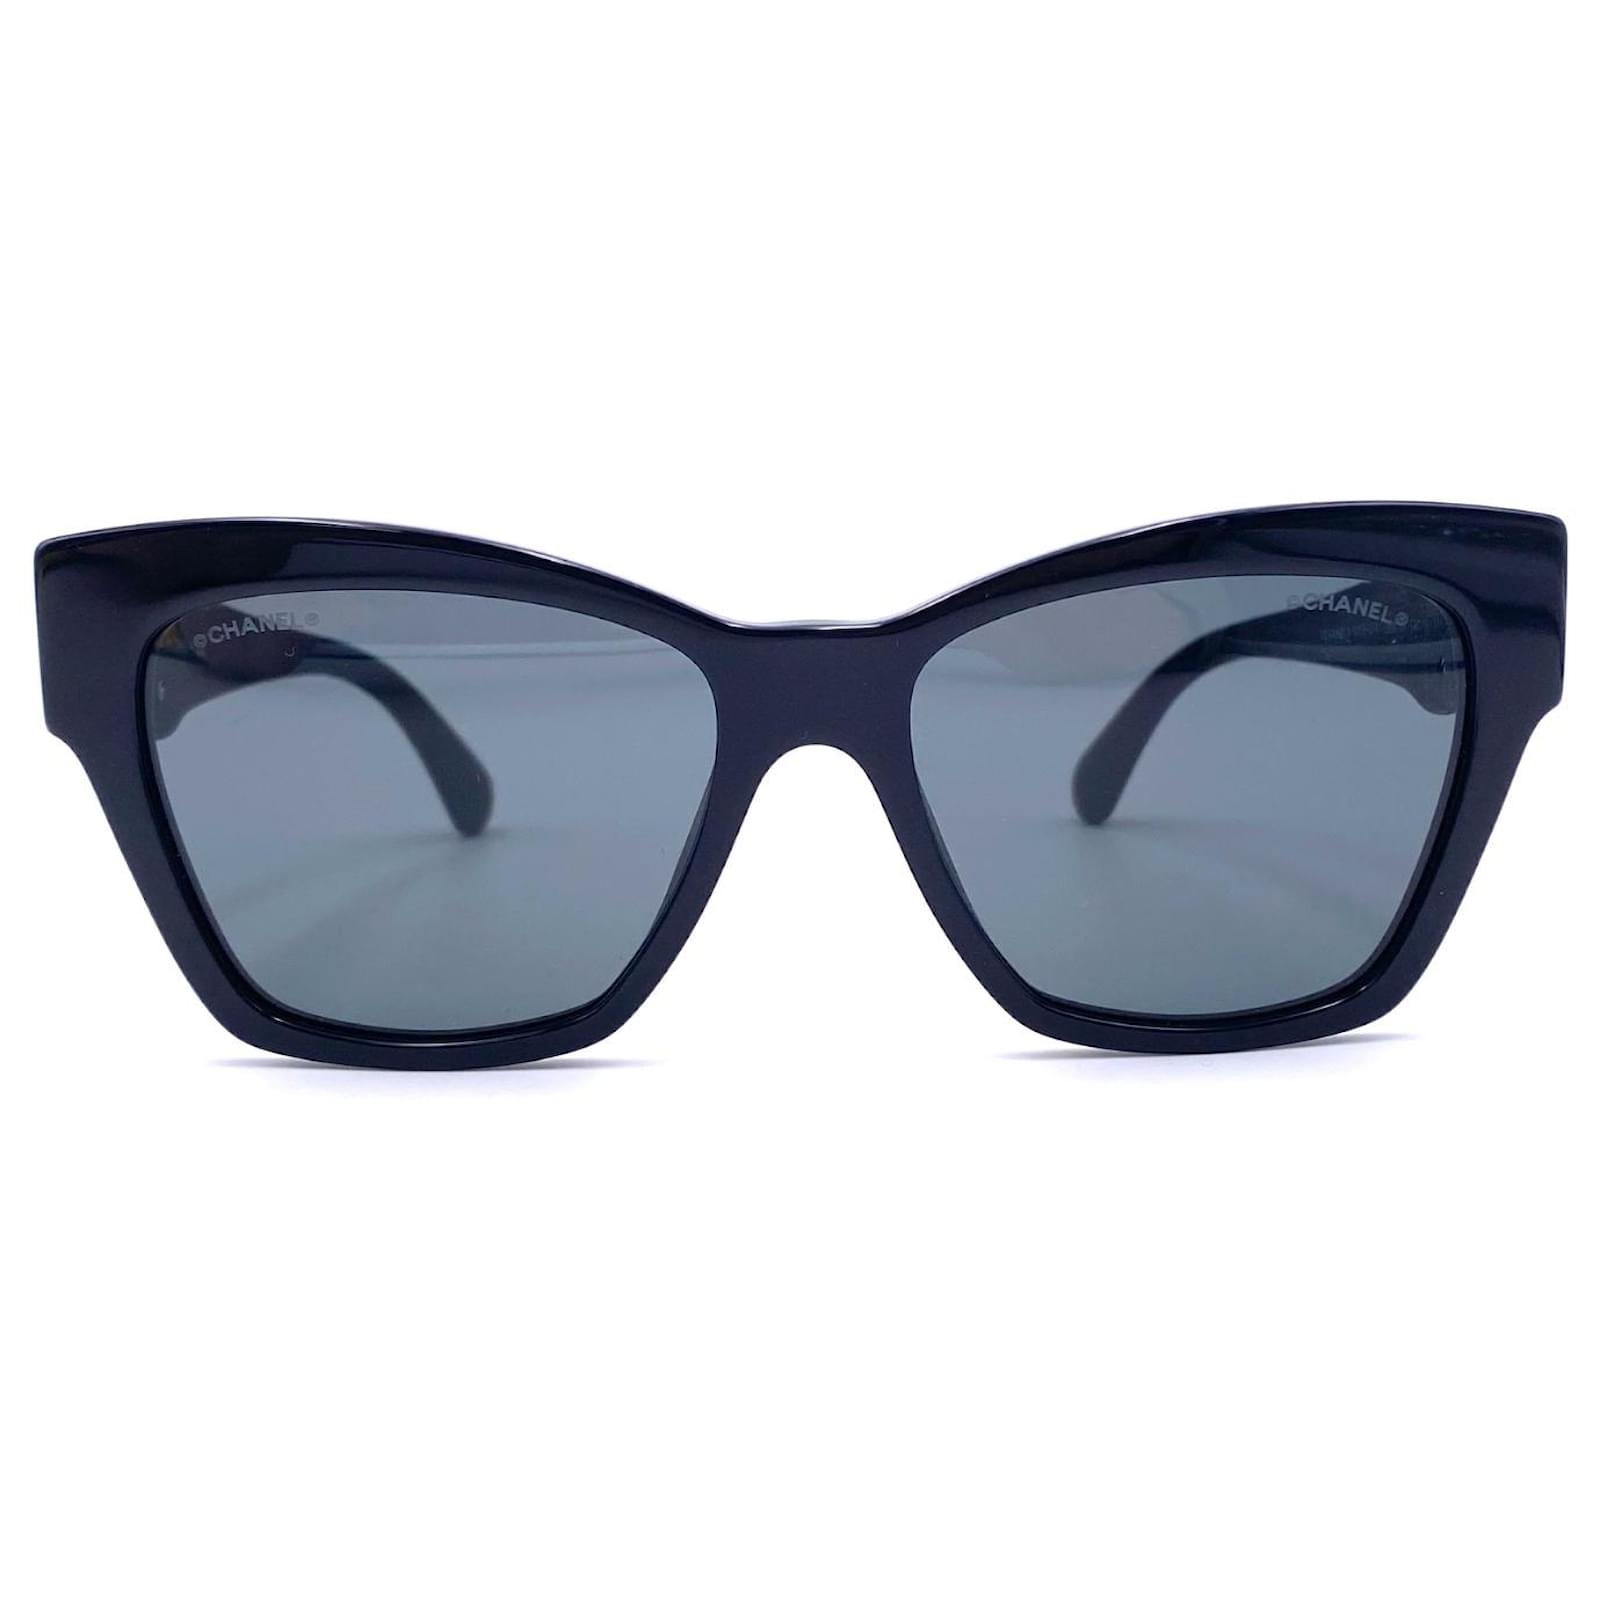 Chanel 5456QB Sunglasses Black/Grey Butterfly Women